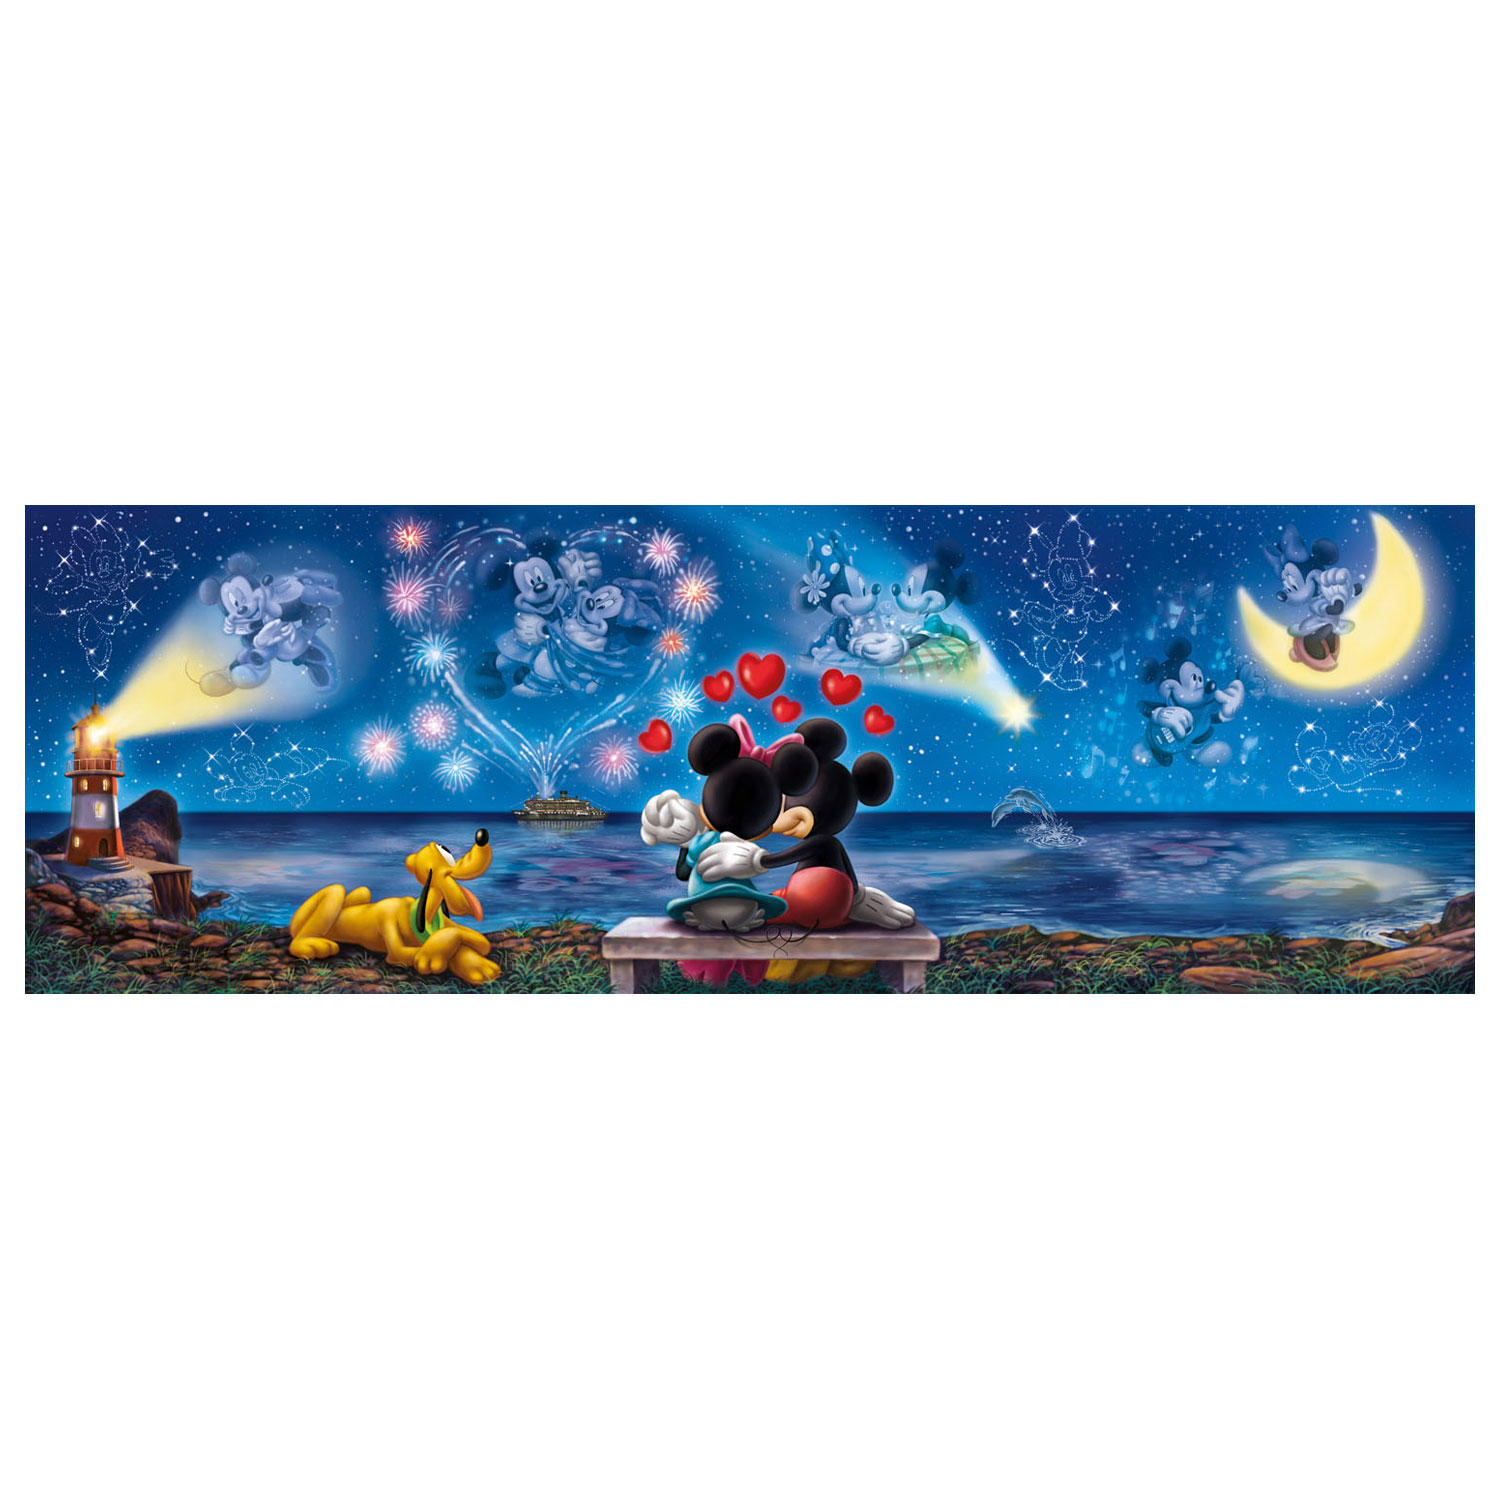 Disney Mickey Mouse Puzzle, Jigsaw Puzzle 1000pcs